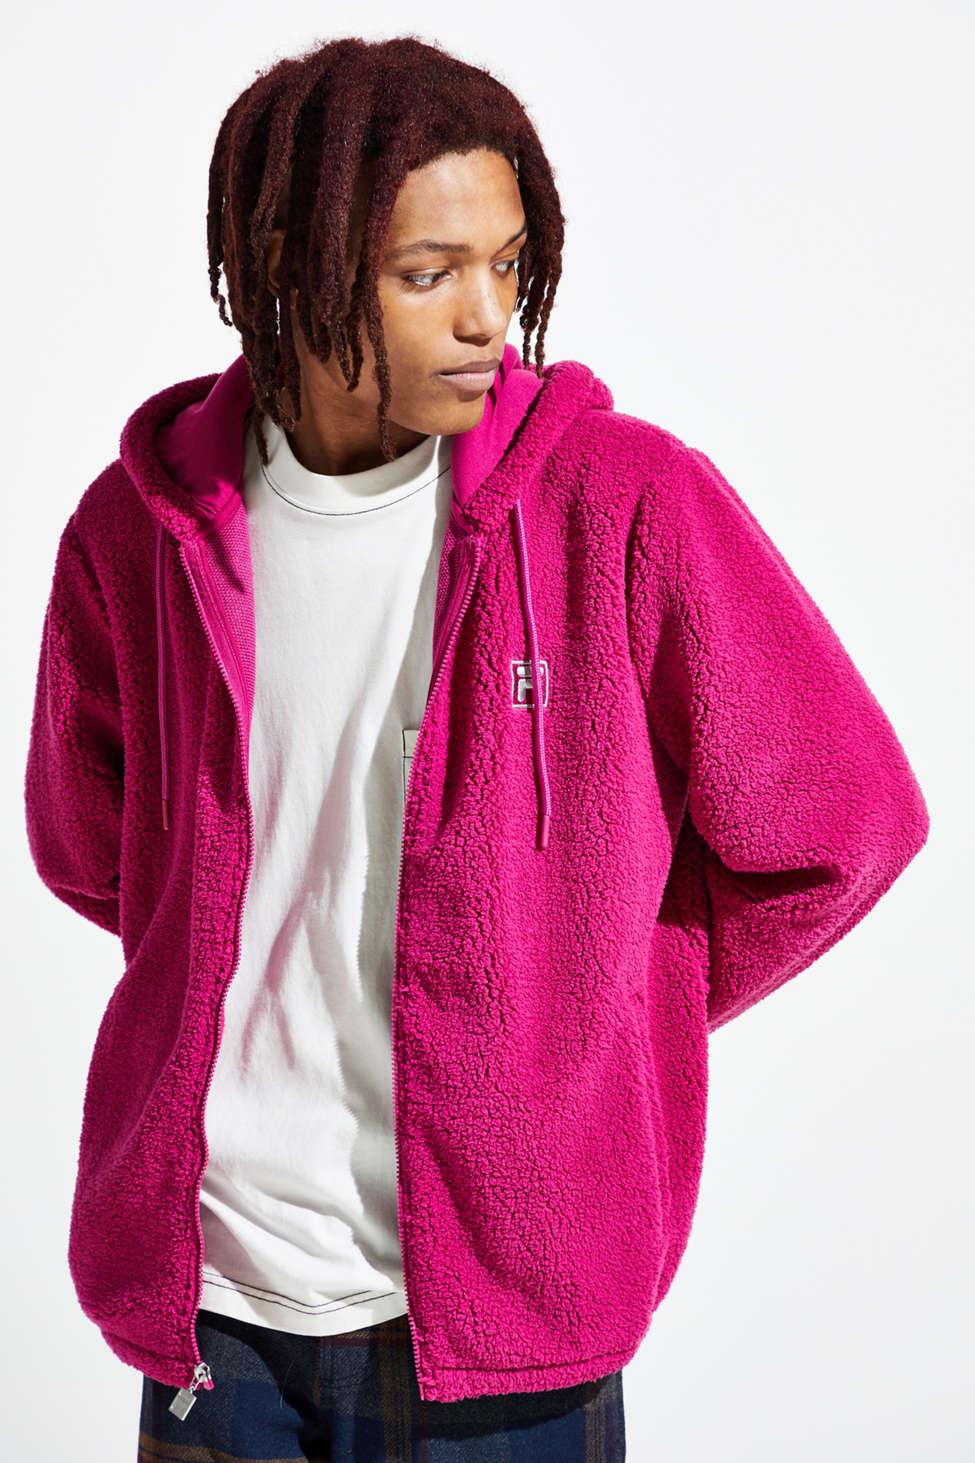 Ananiver Gezgin Var olmak fila fleece jacket urban outfitters -  rosalanders.com